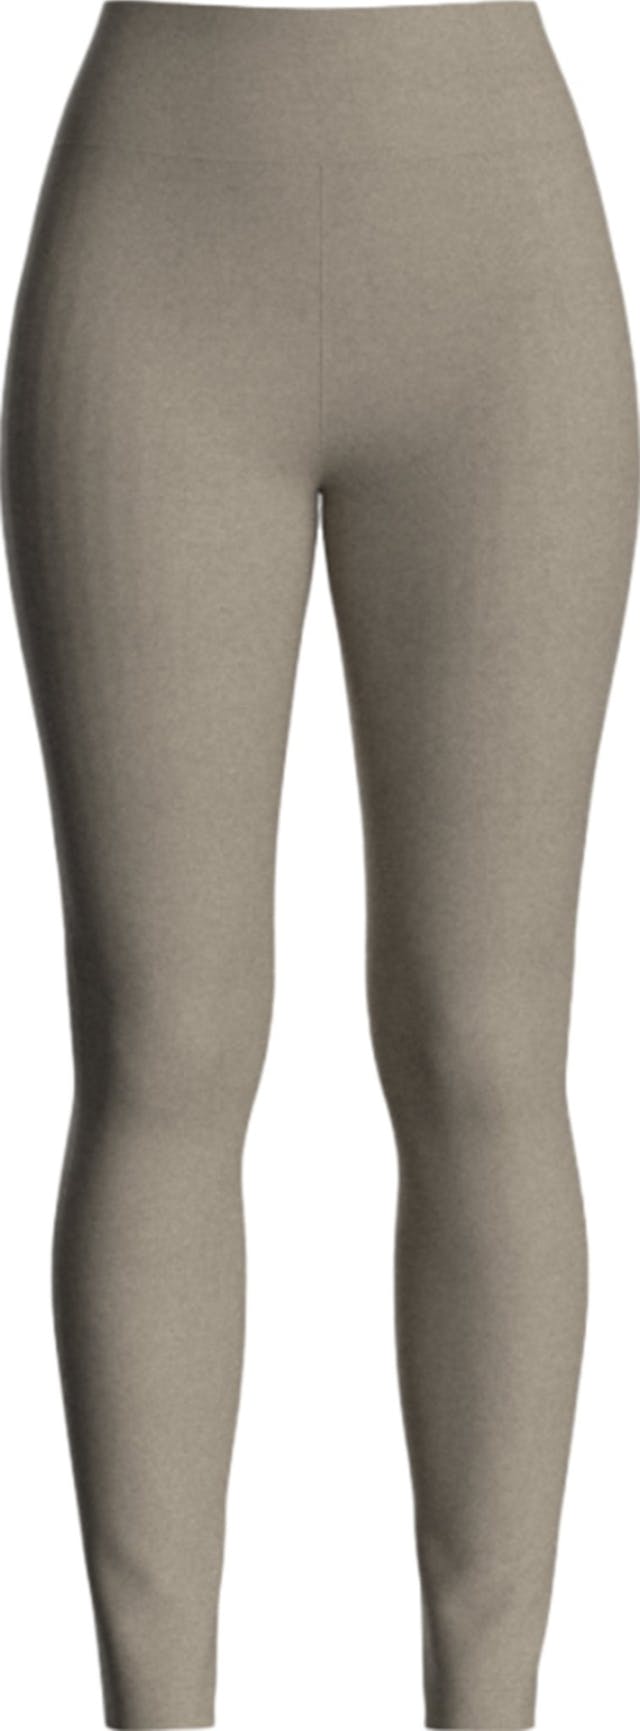 Product image for Hygge Legging - Women's